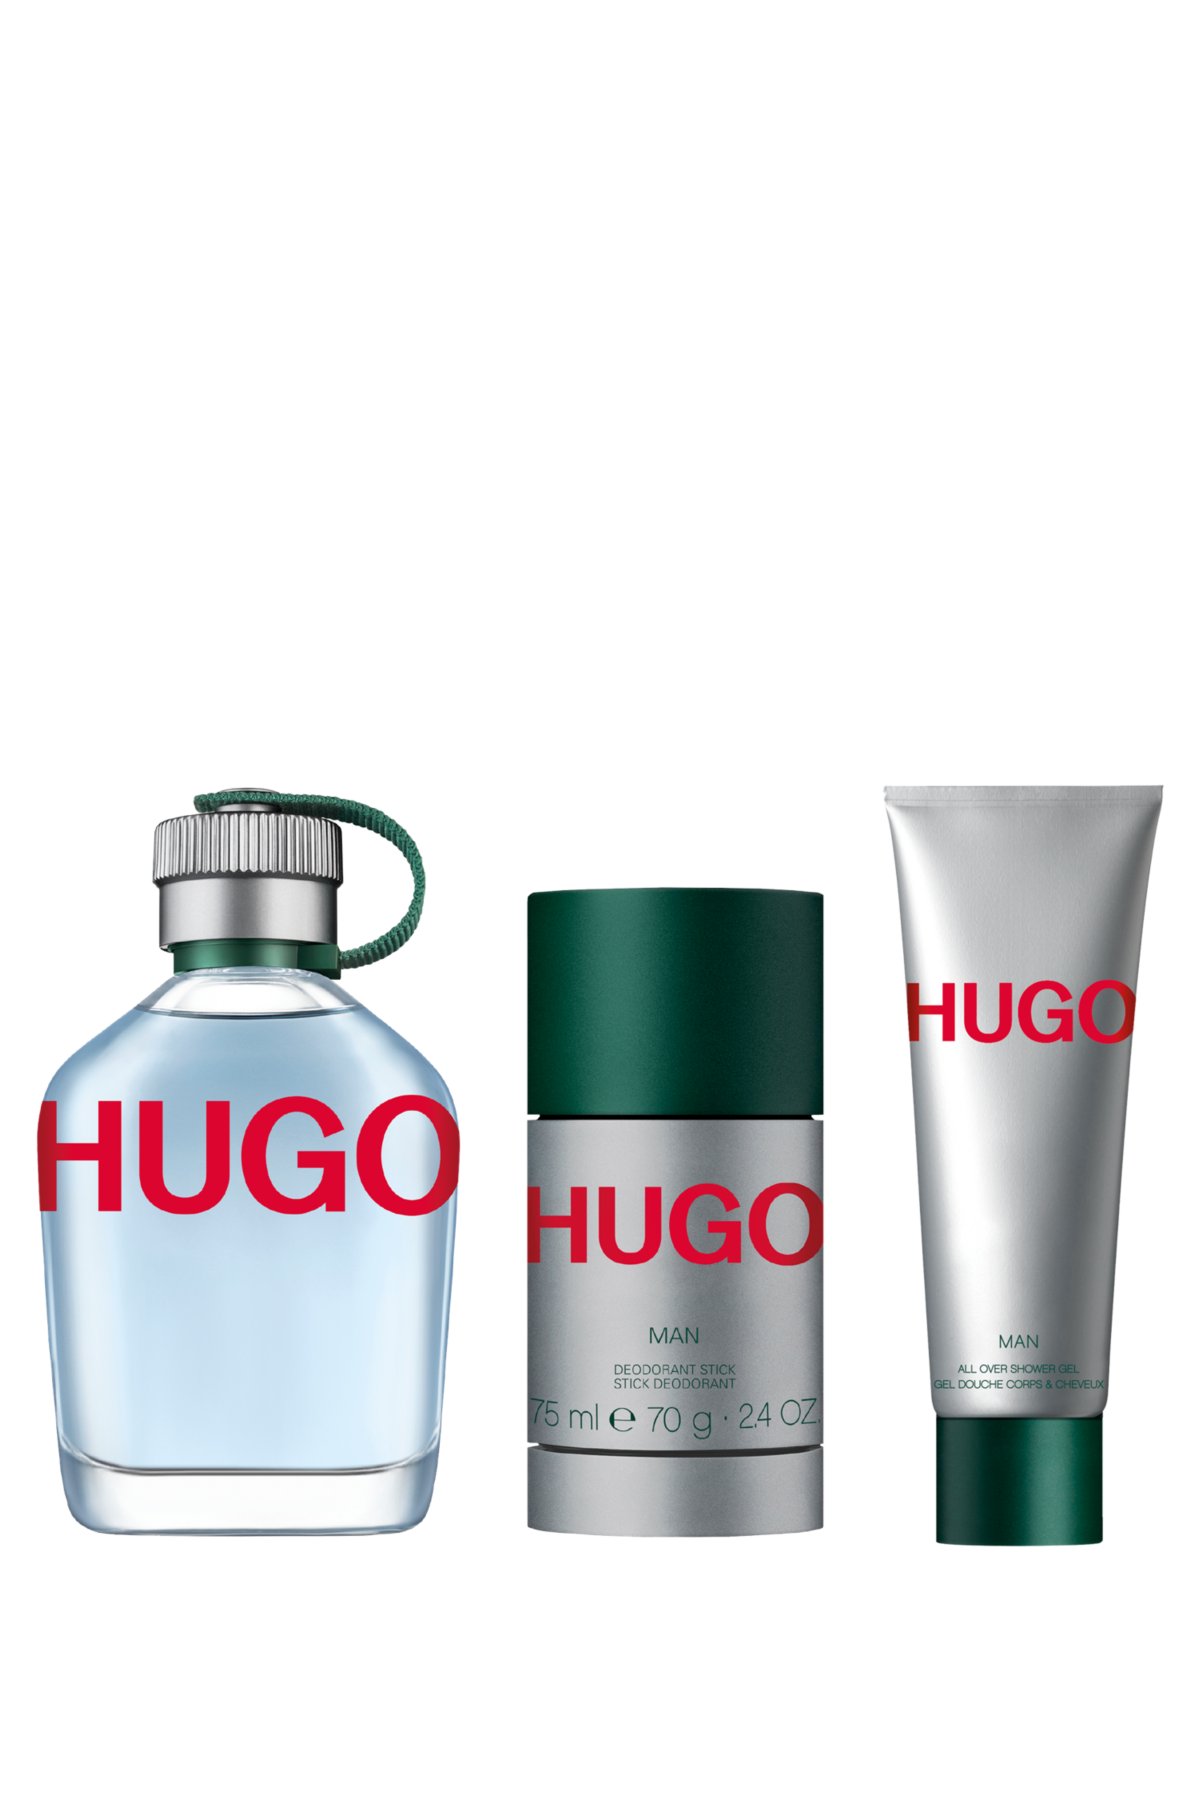 dramatisch vlot stuk HUGO - HUGO Man eau de toilette, deodorant and shower gel set